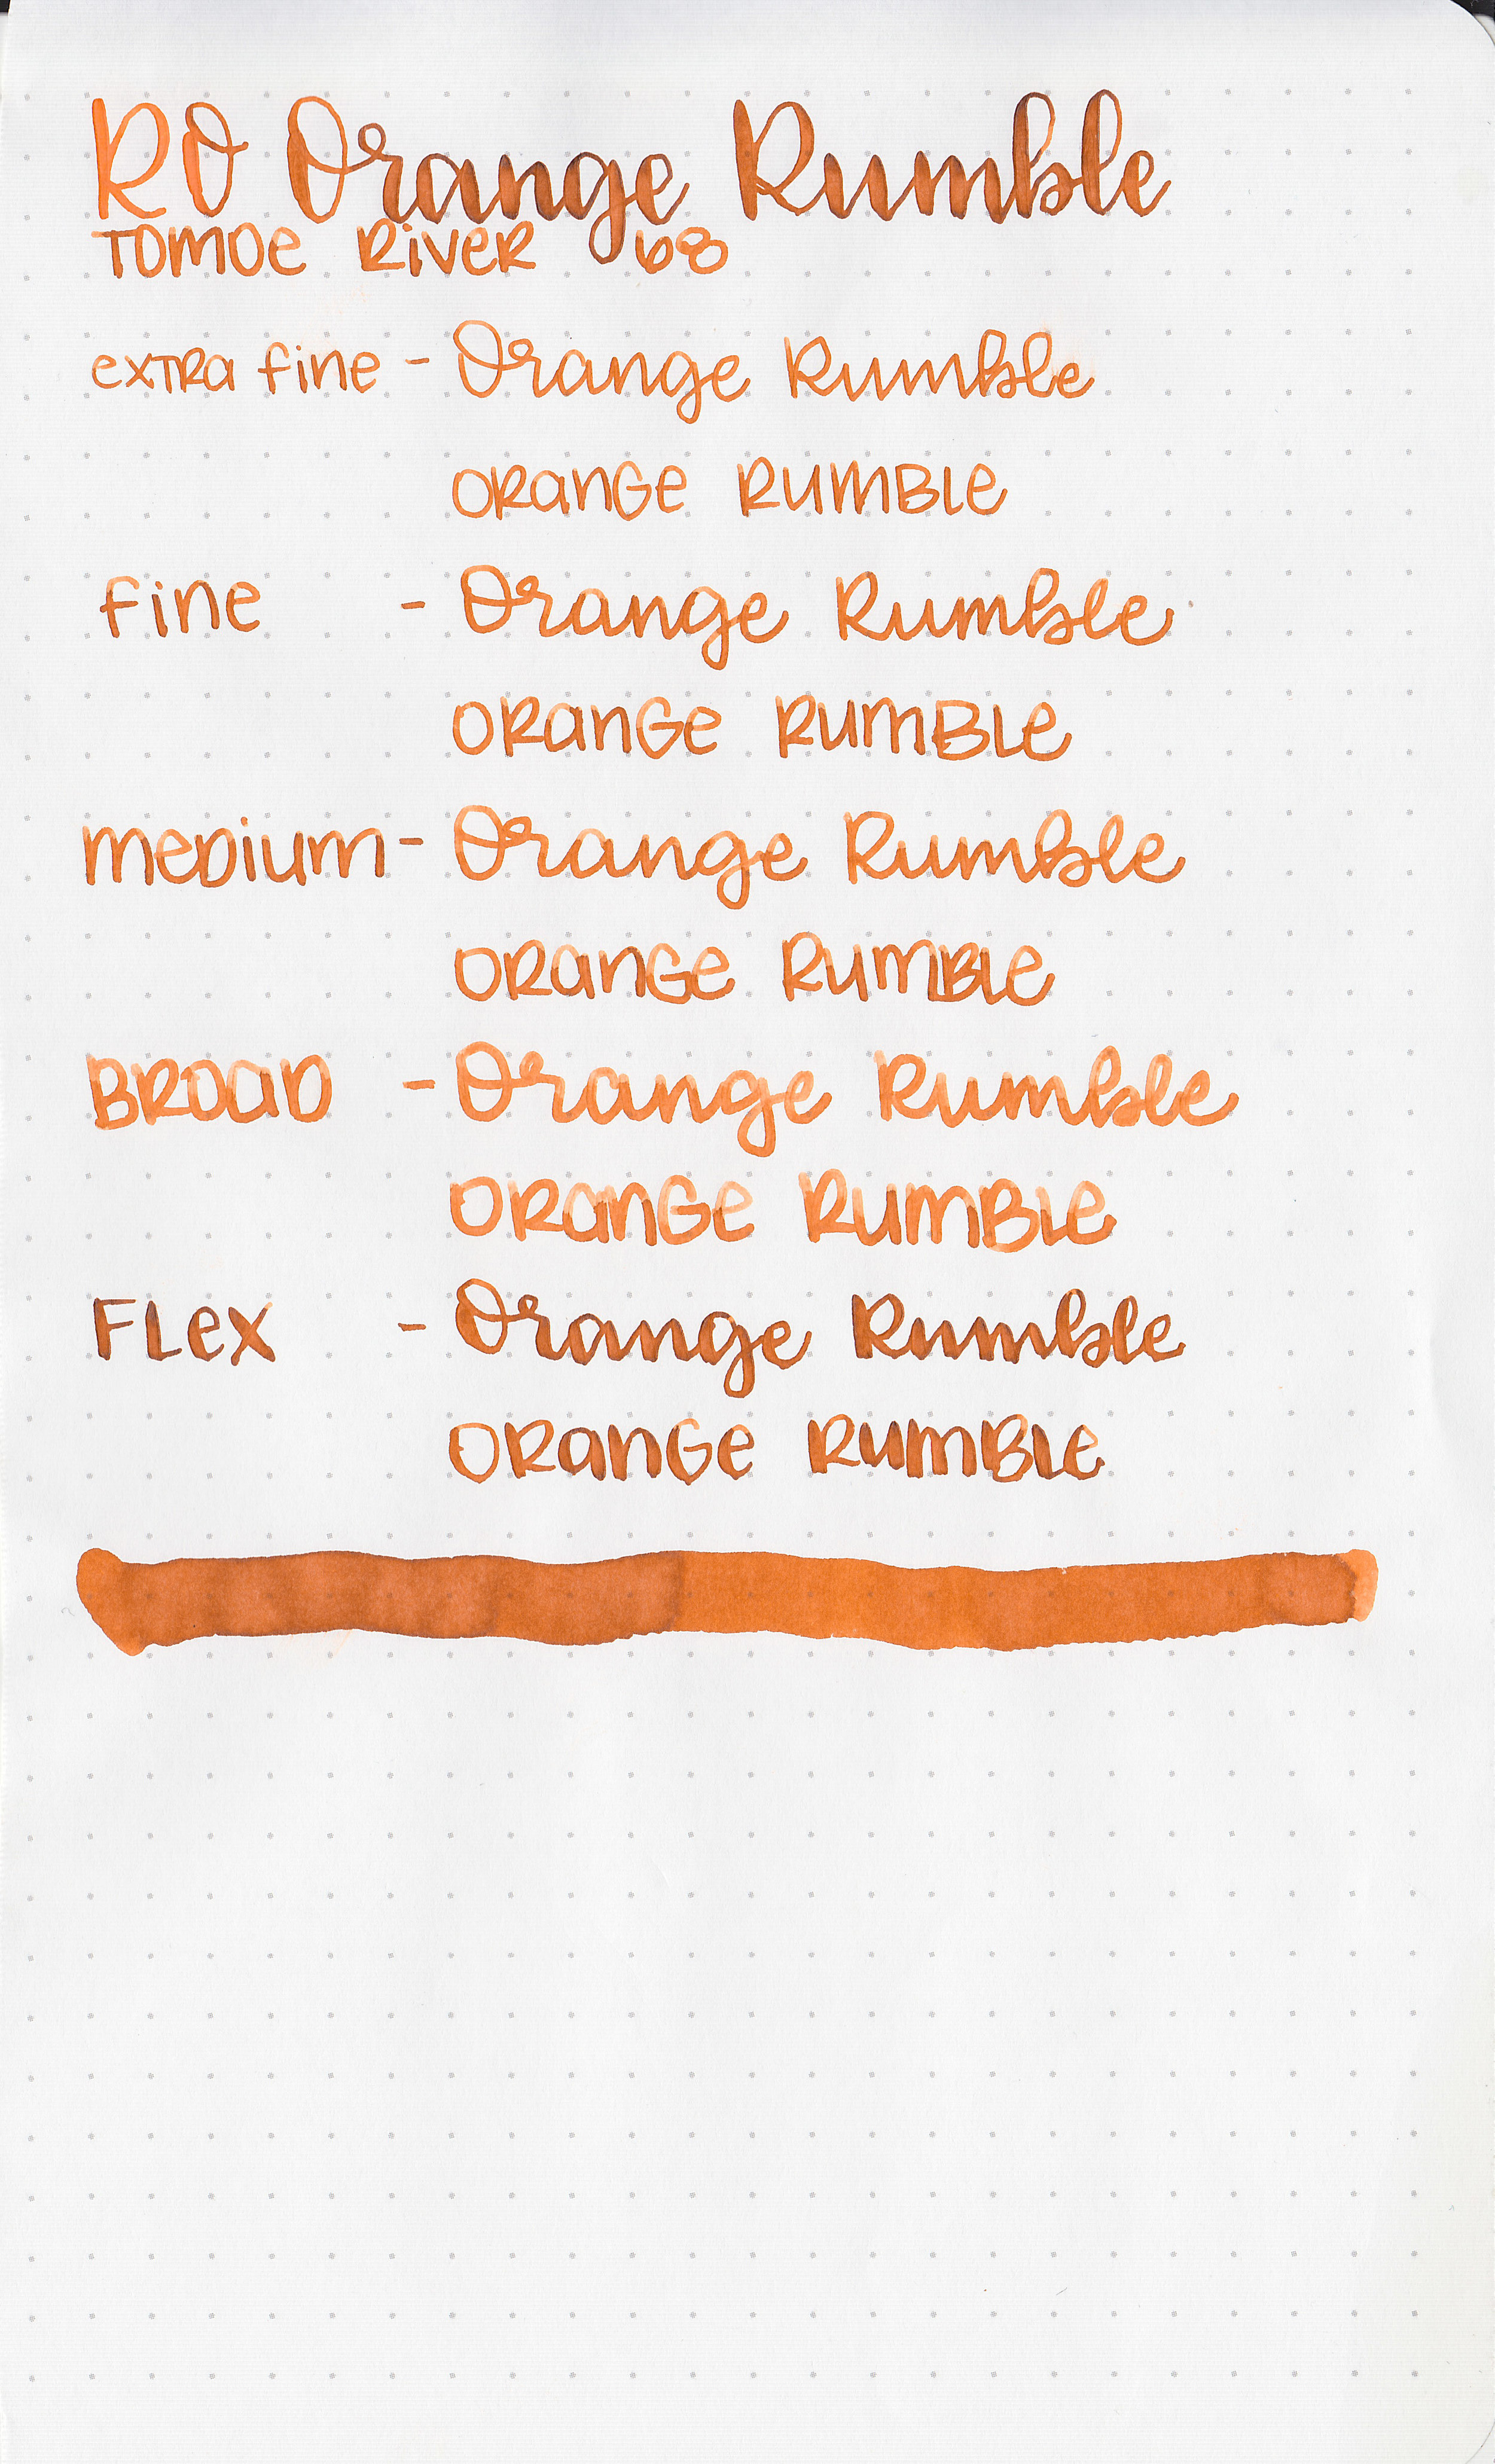 ro-orange-rumble-7.jpg